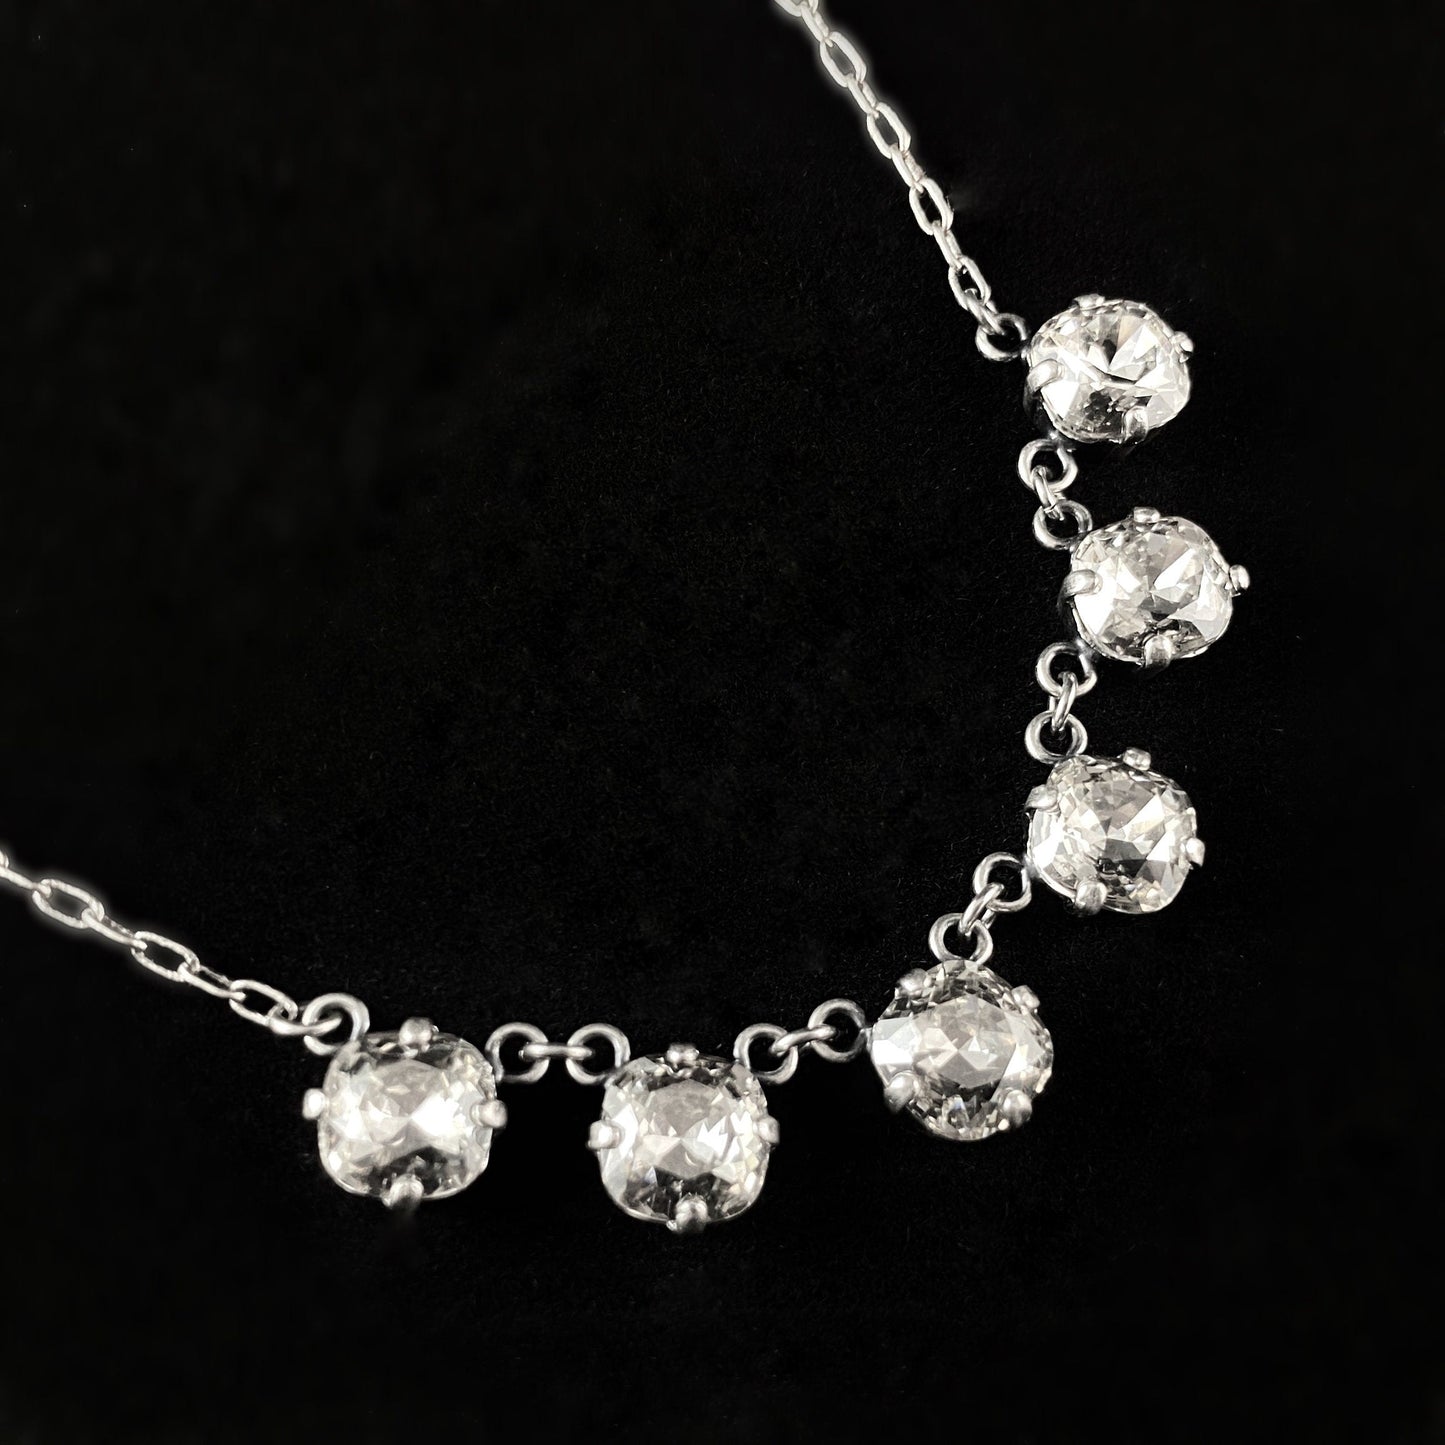 Cushion Cut Swarovski Crystal Pendant Necklace, Clear - La Vie Parisienne by Catherine Popesco